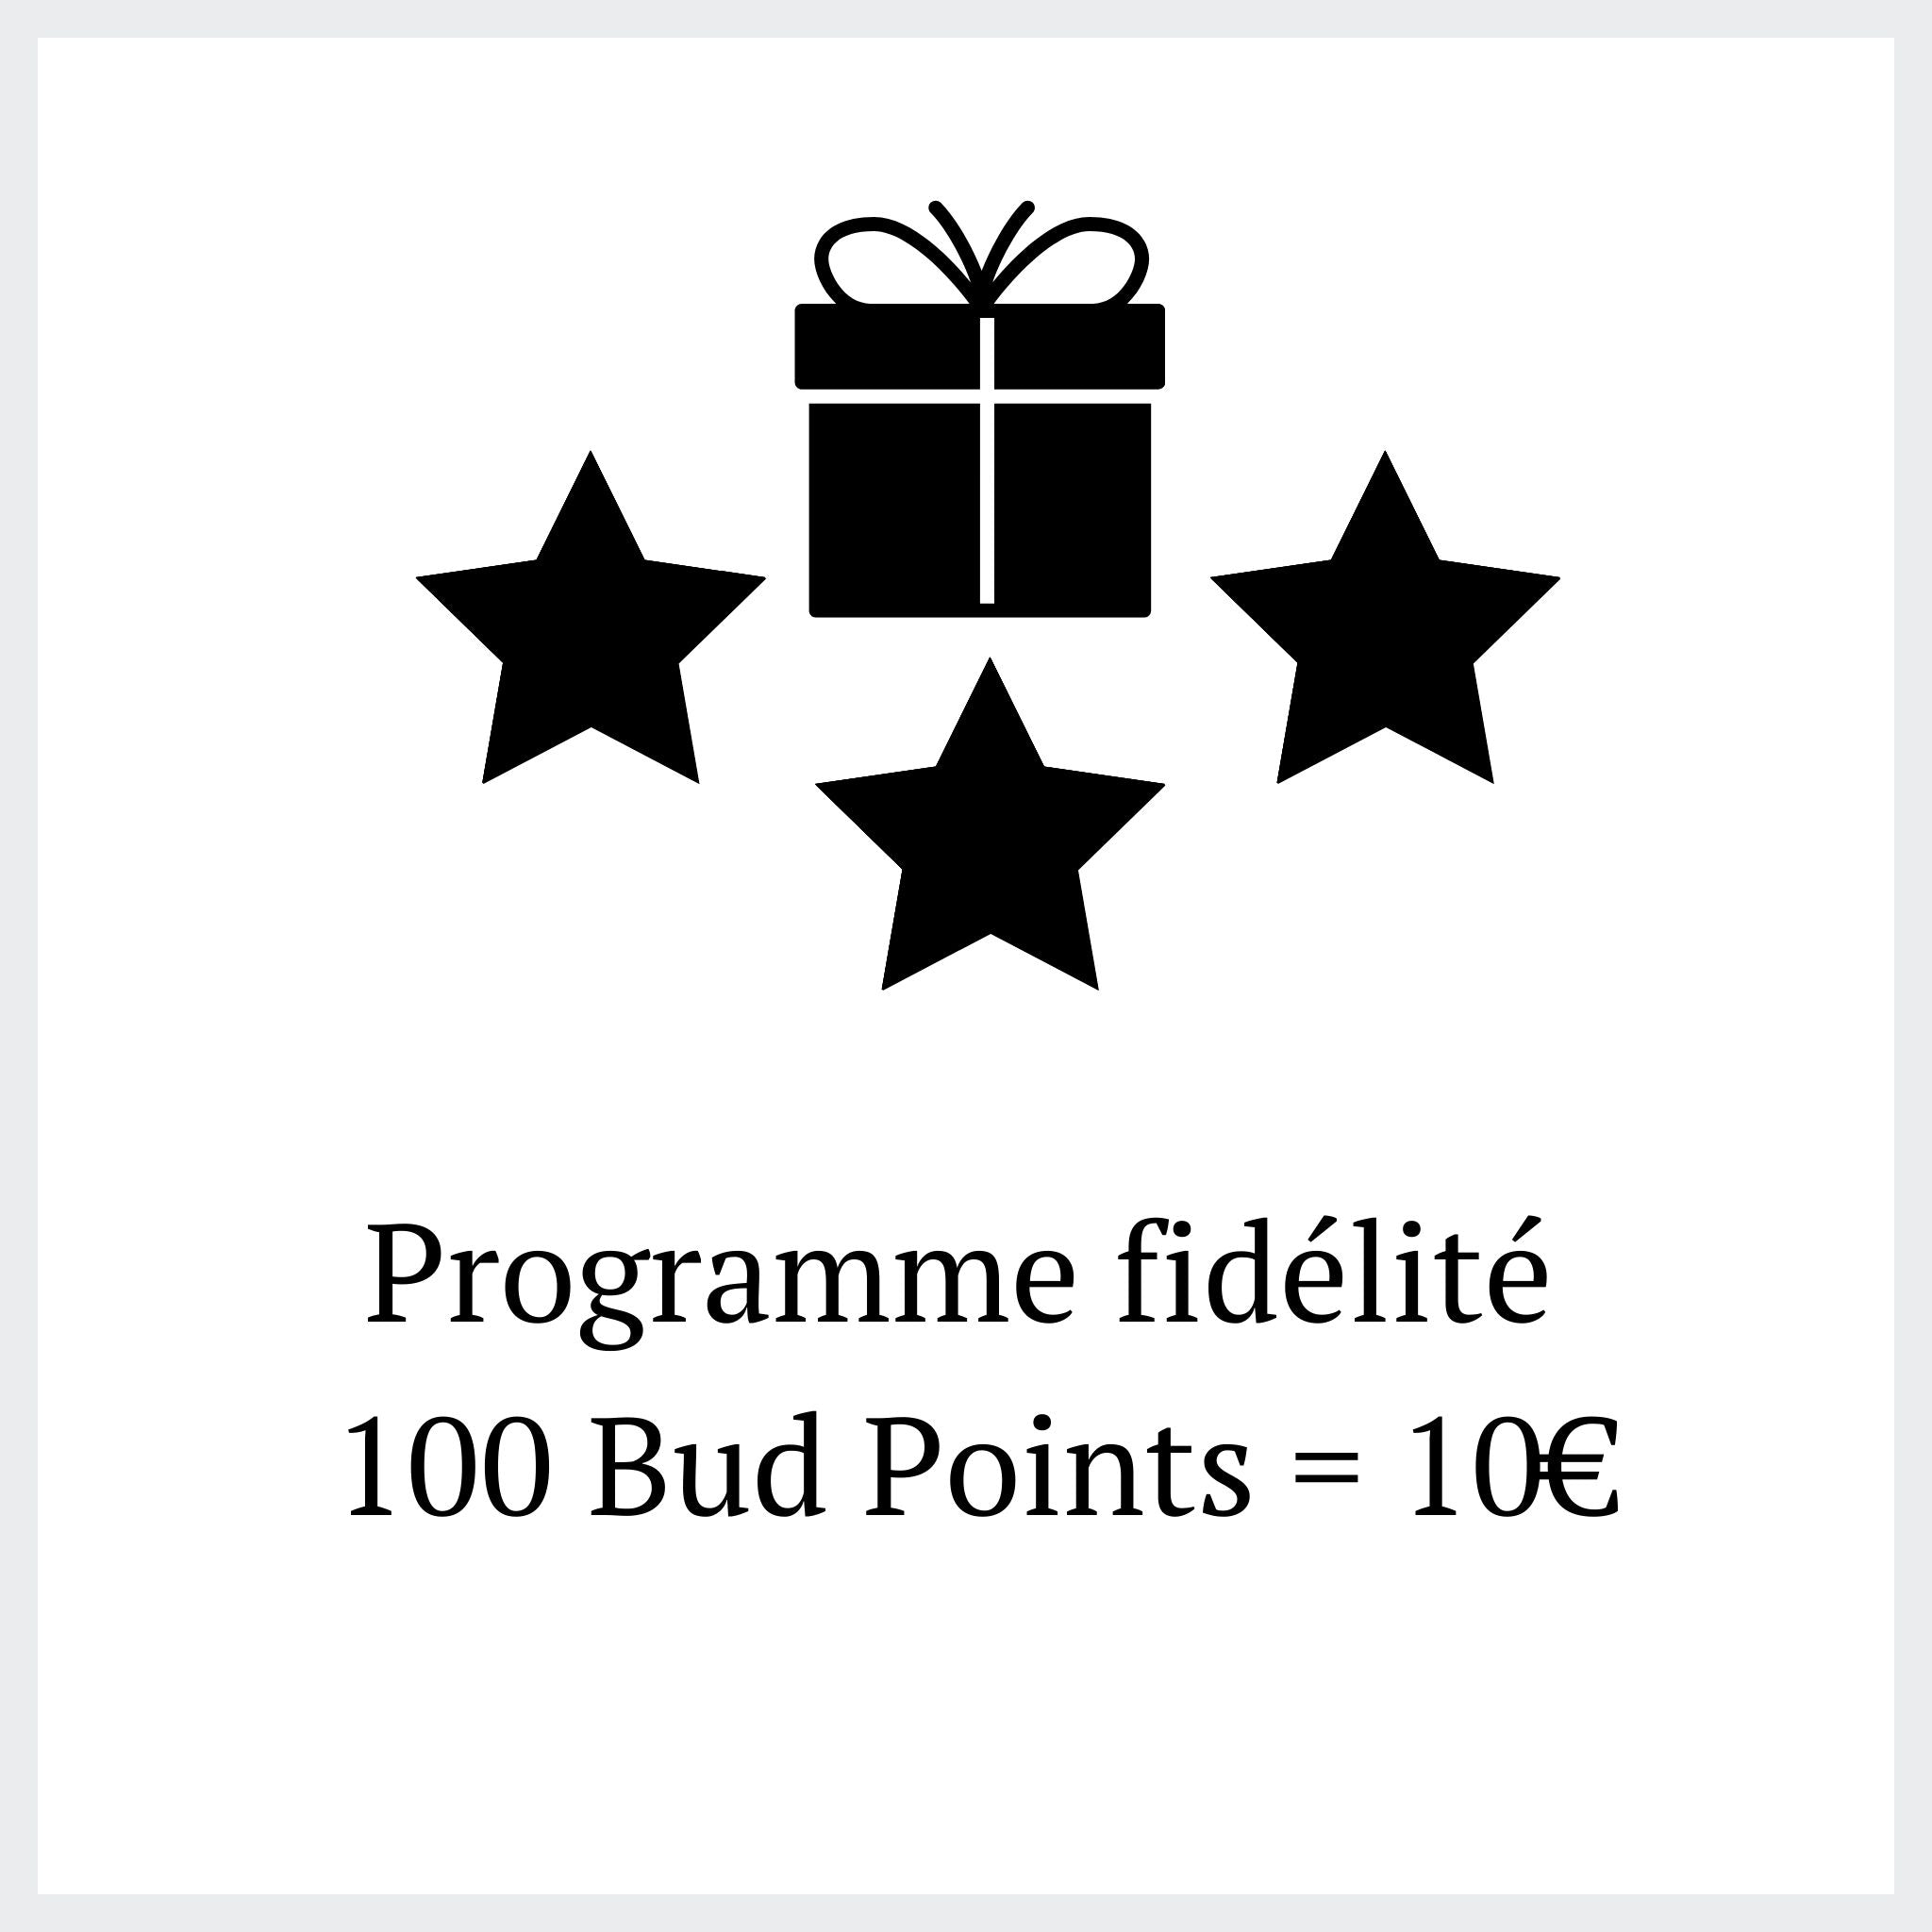 Programme fidélité natural bud, 100 bud points = 10€